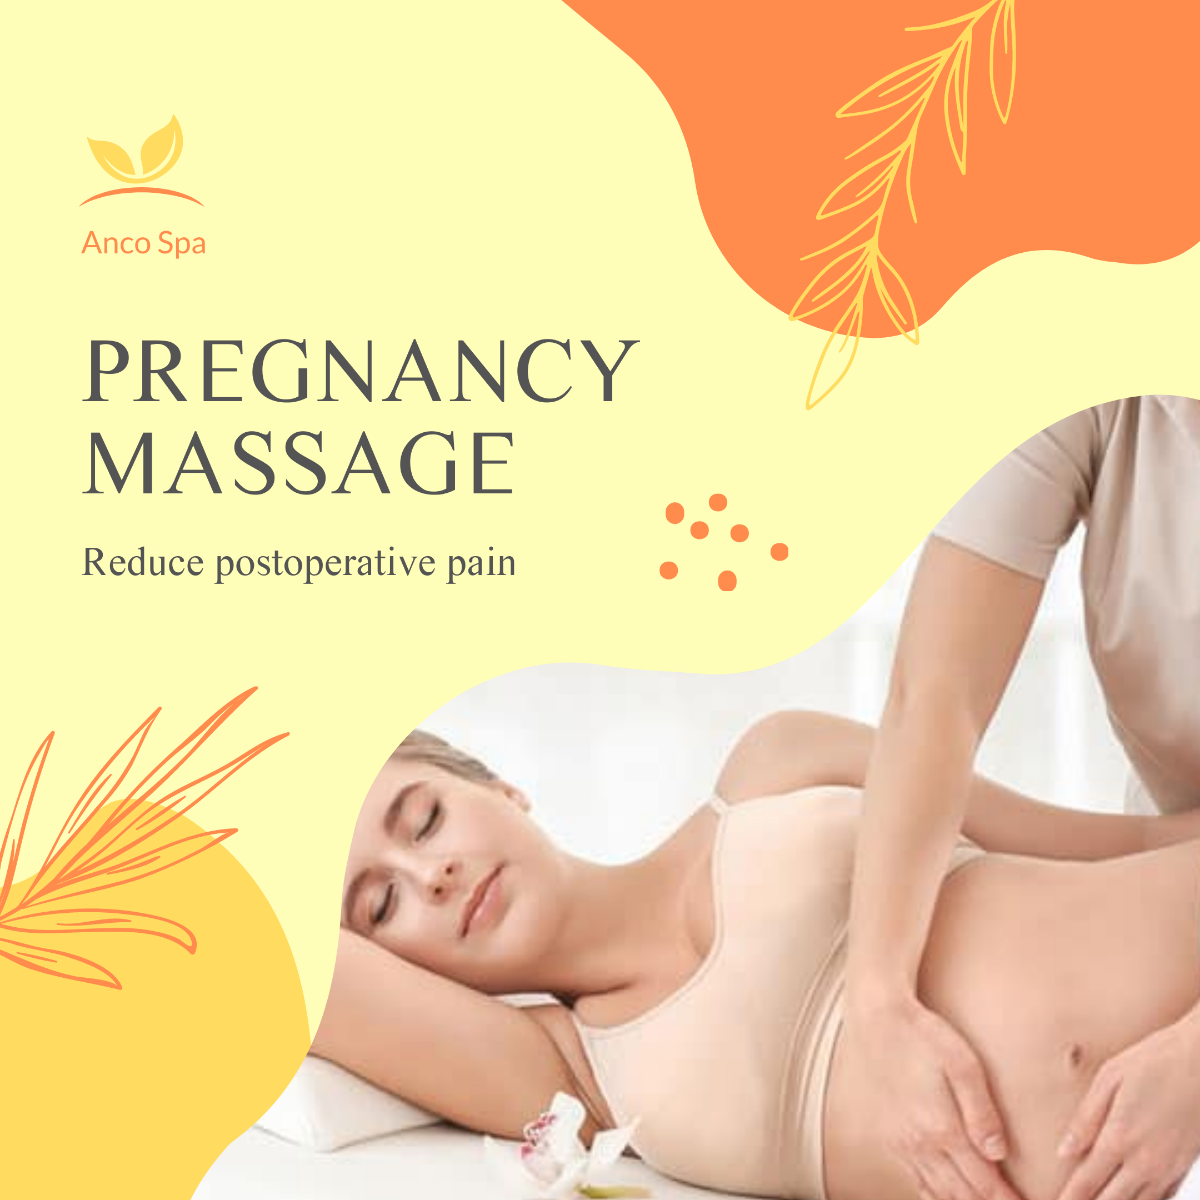 Free Pregnancy Massage Post, Facebook, Instagram Template